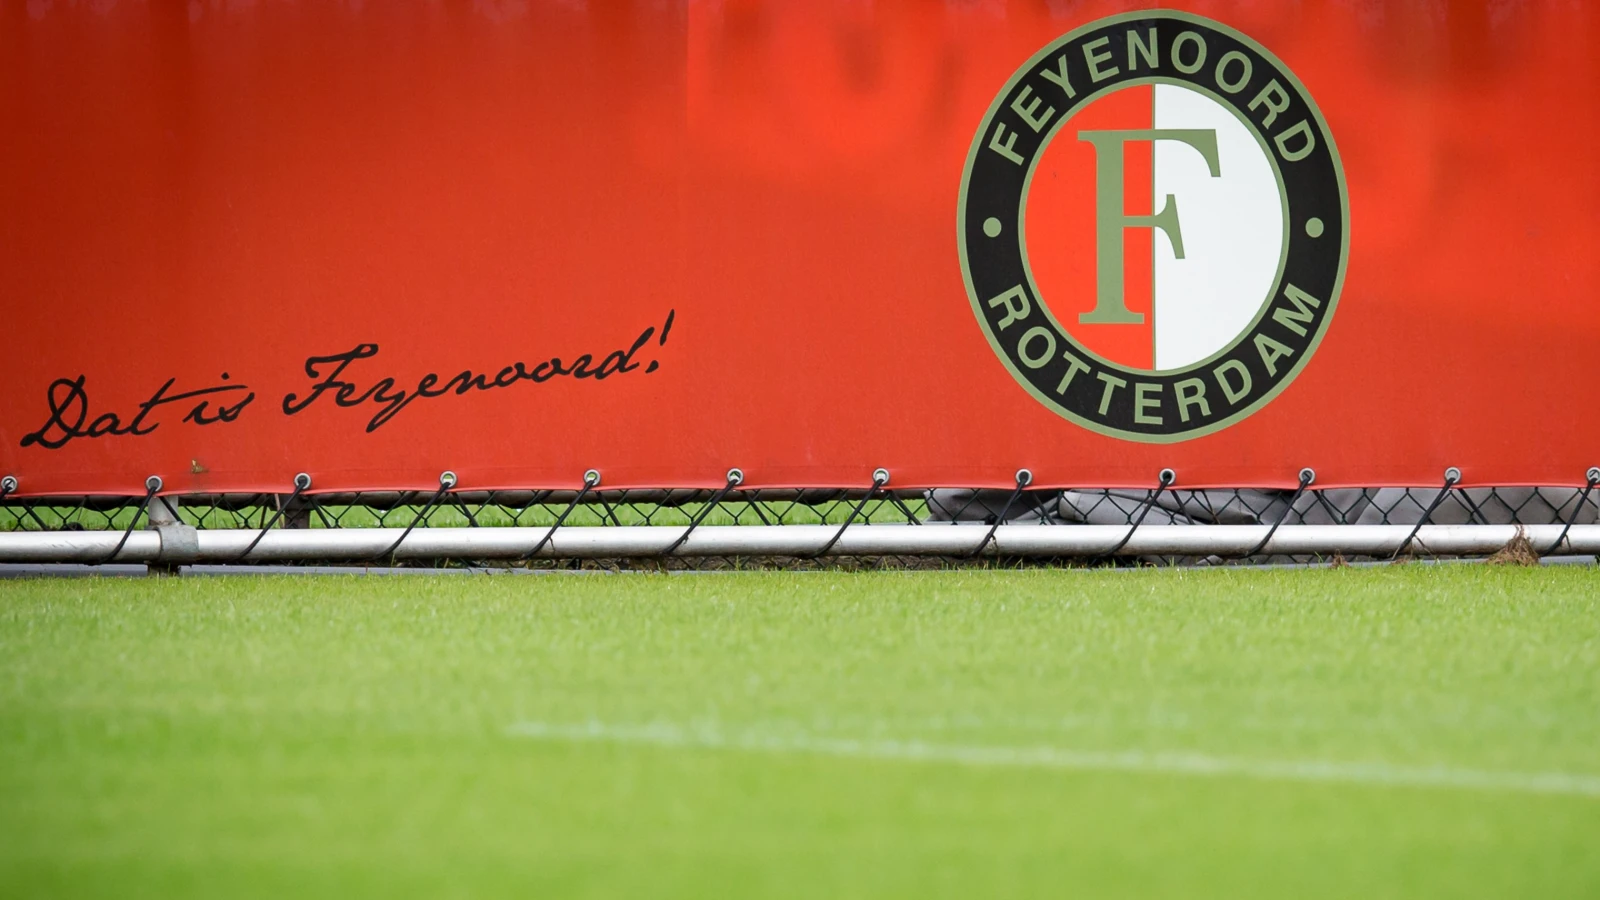 'Feyenoord hint op lancering thuisshirt'